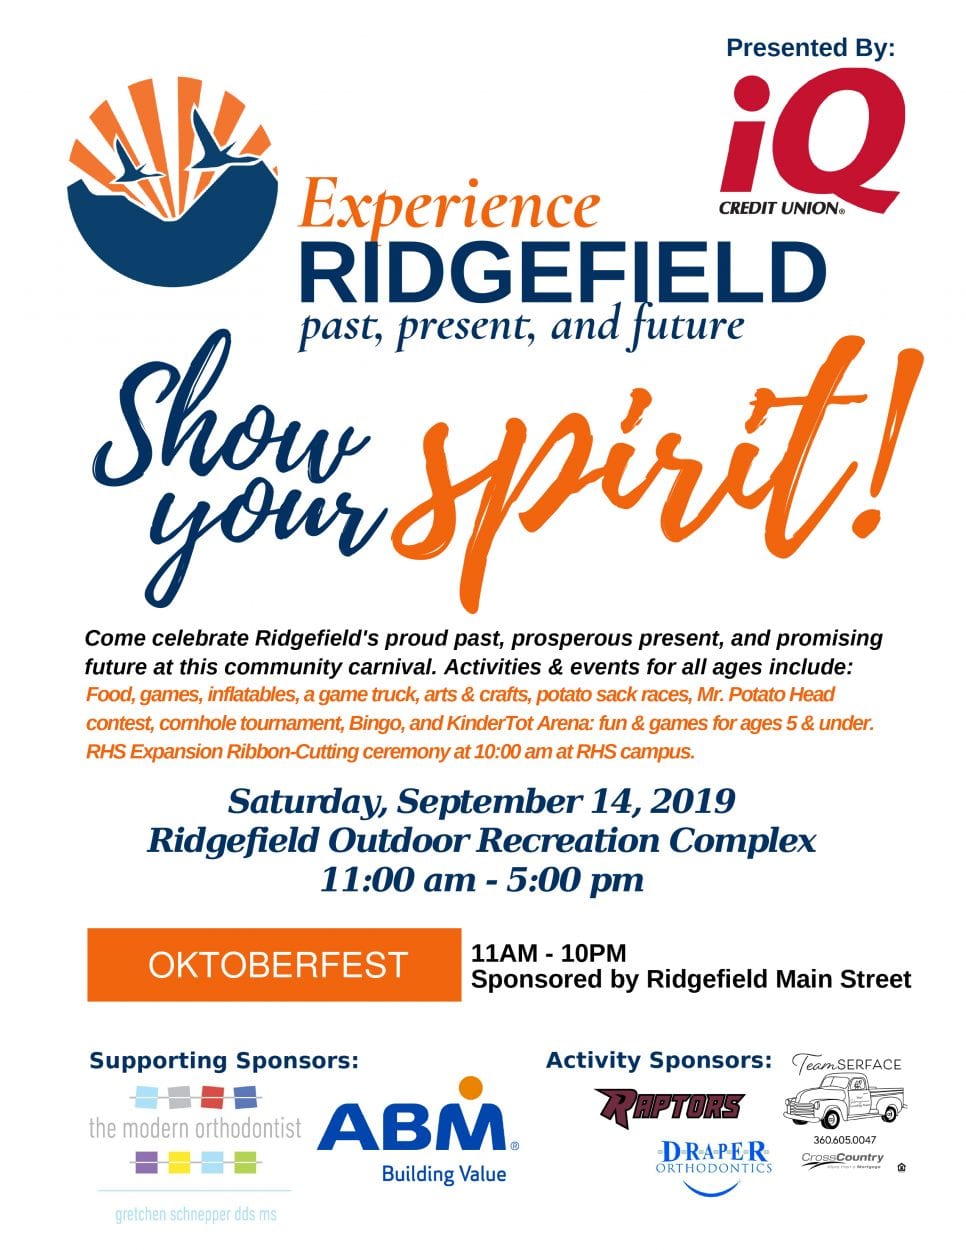 Ridgefield School District hosts Experience Ridgefield on Sat., Sept. 14